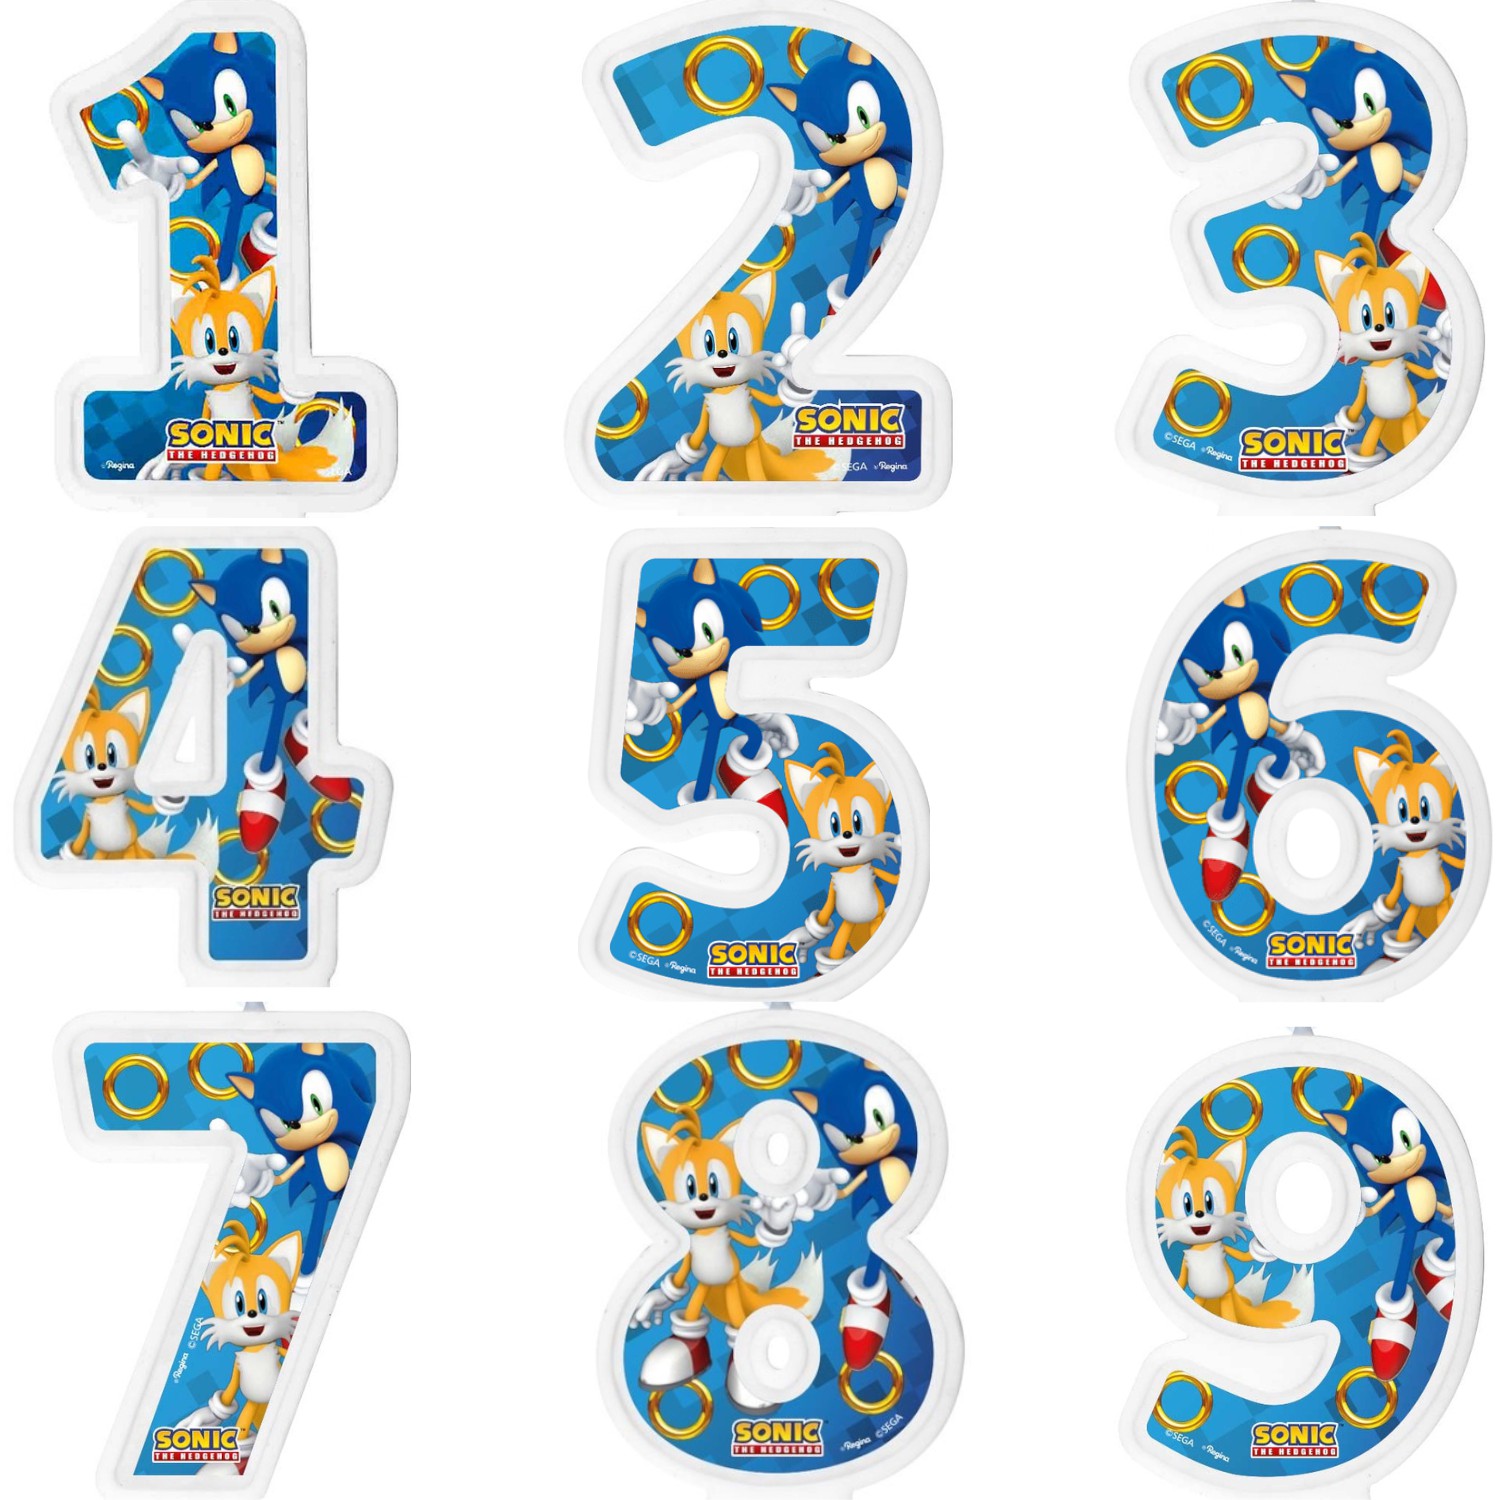 Fantasia De Super Sonic 8 Anos